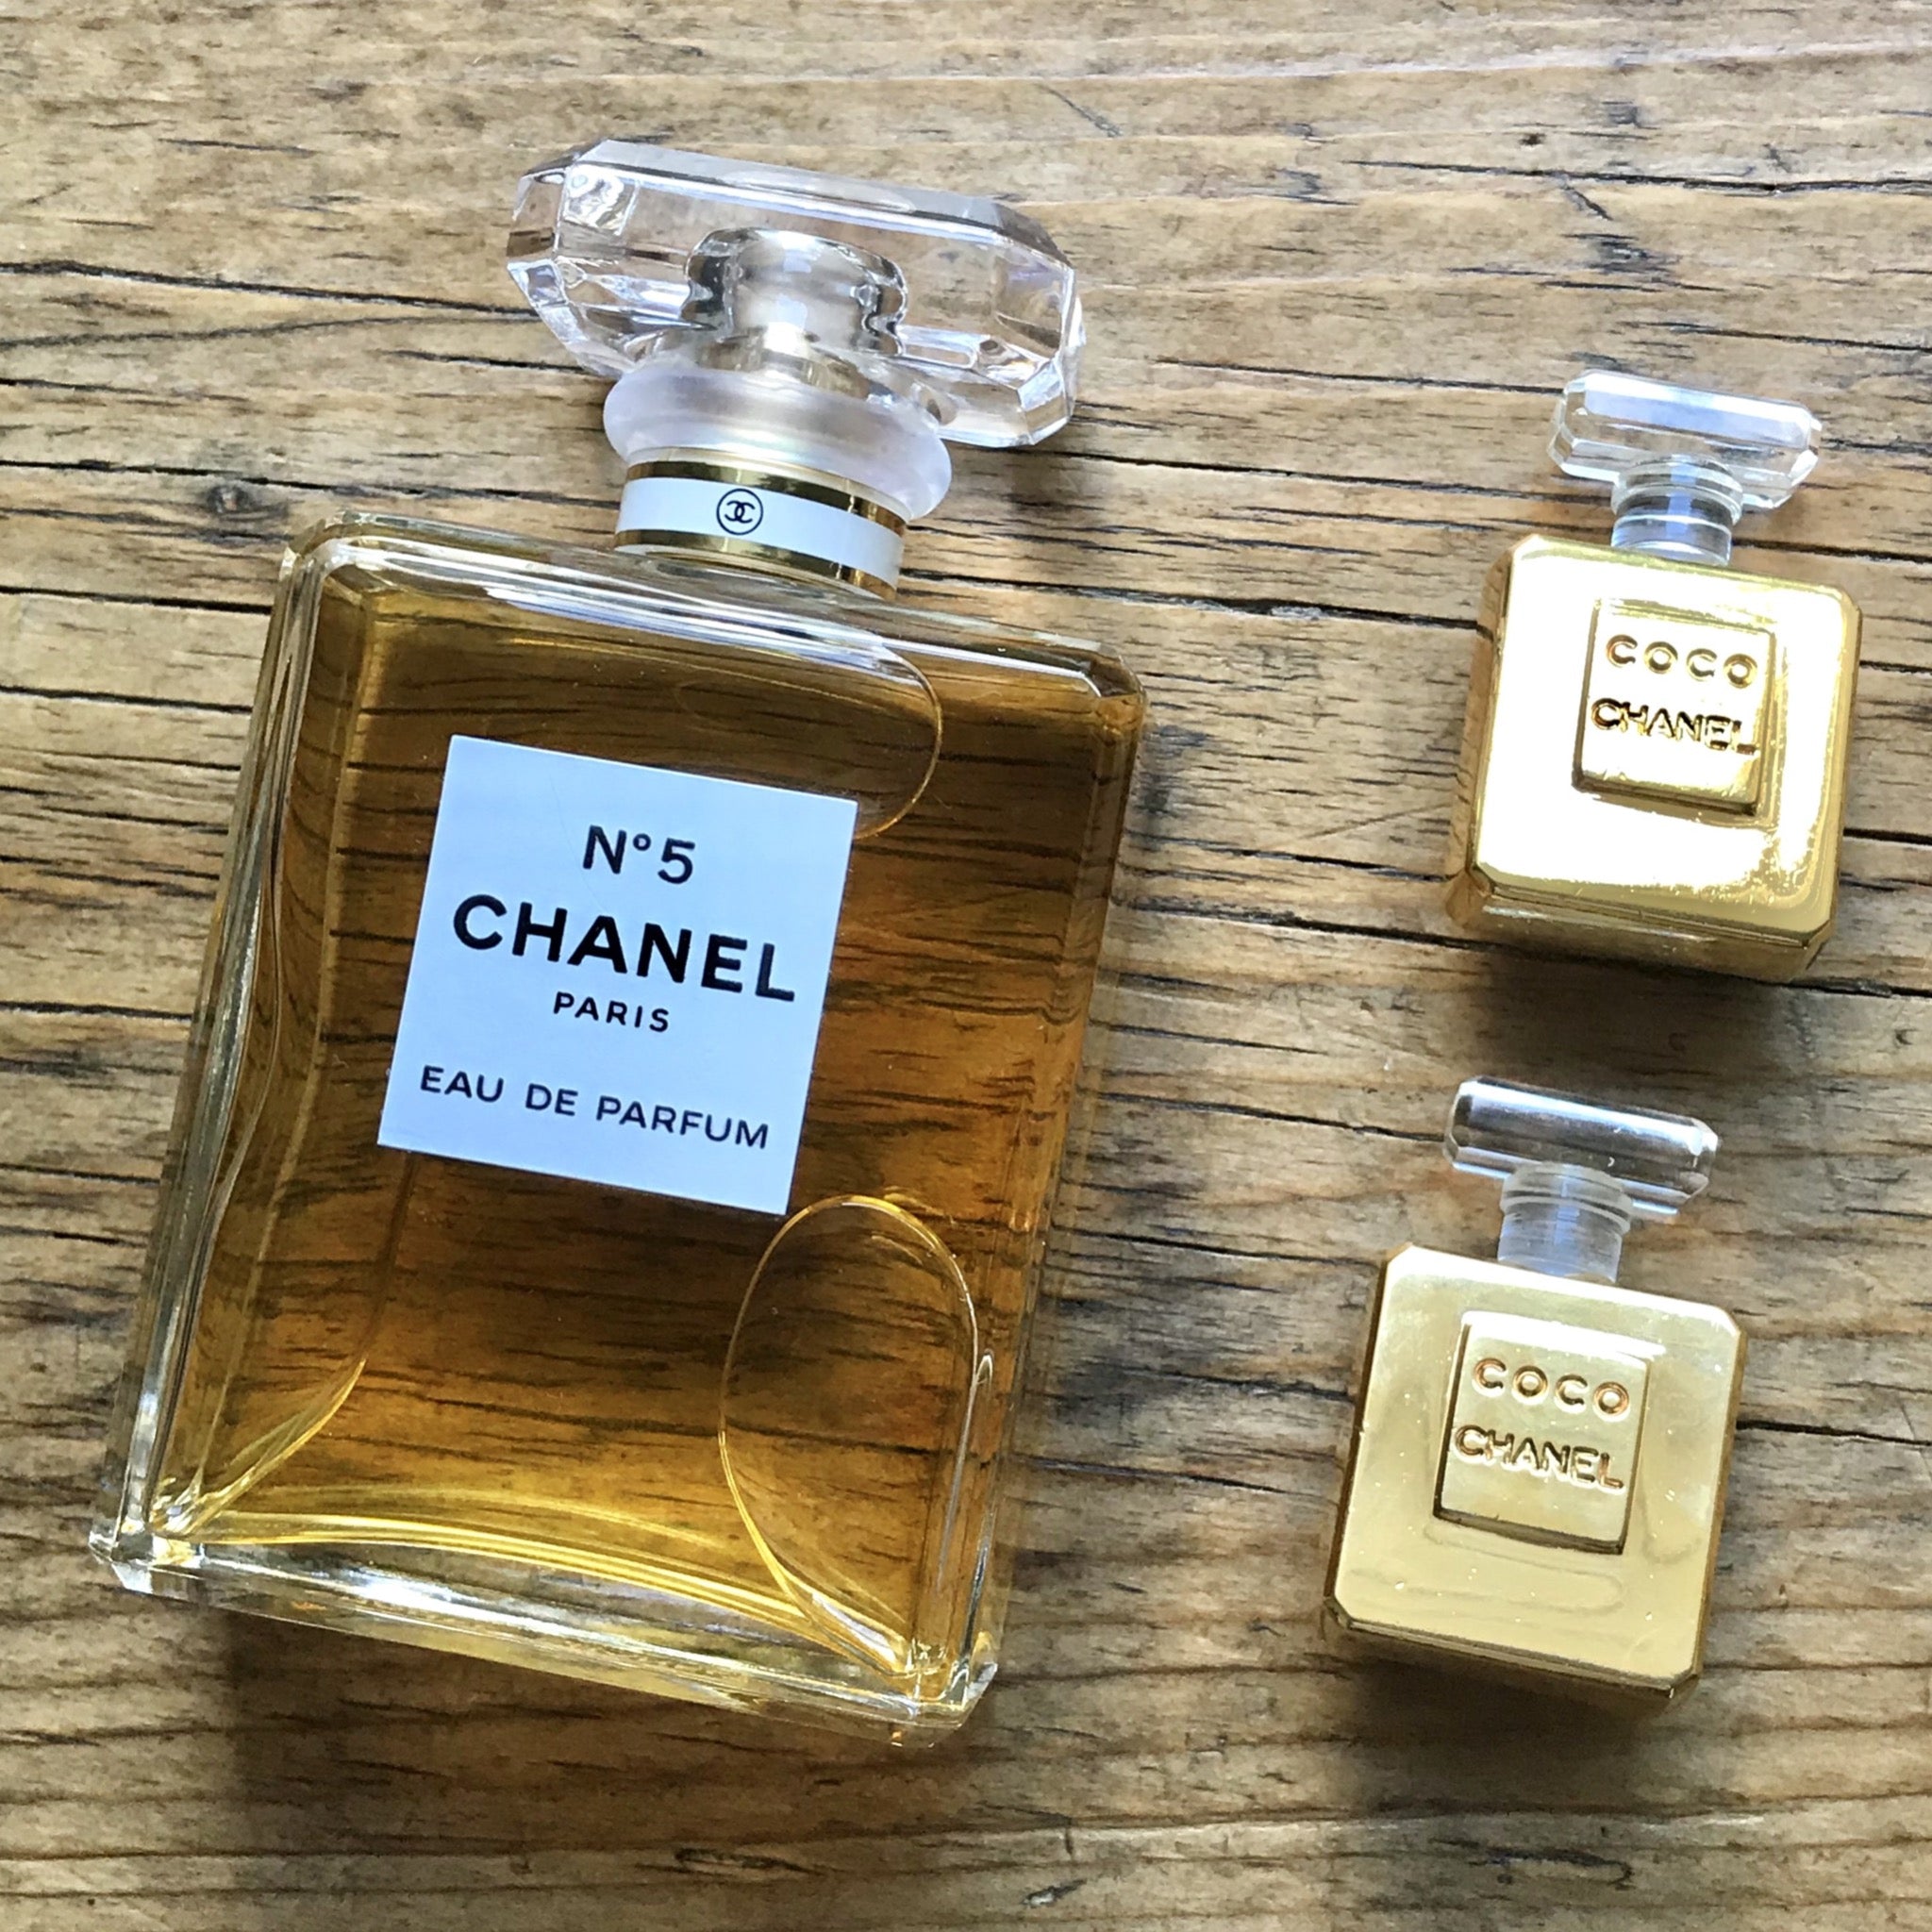 Vintage Chanel No 5 Perfume Bottle